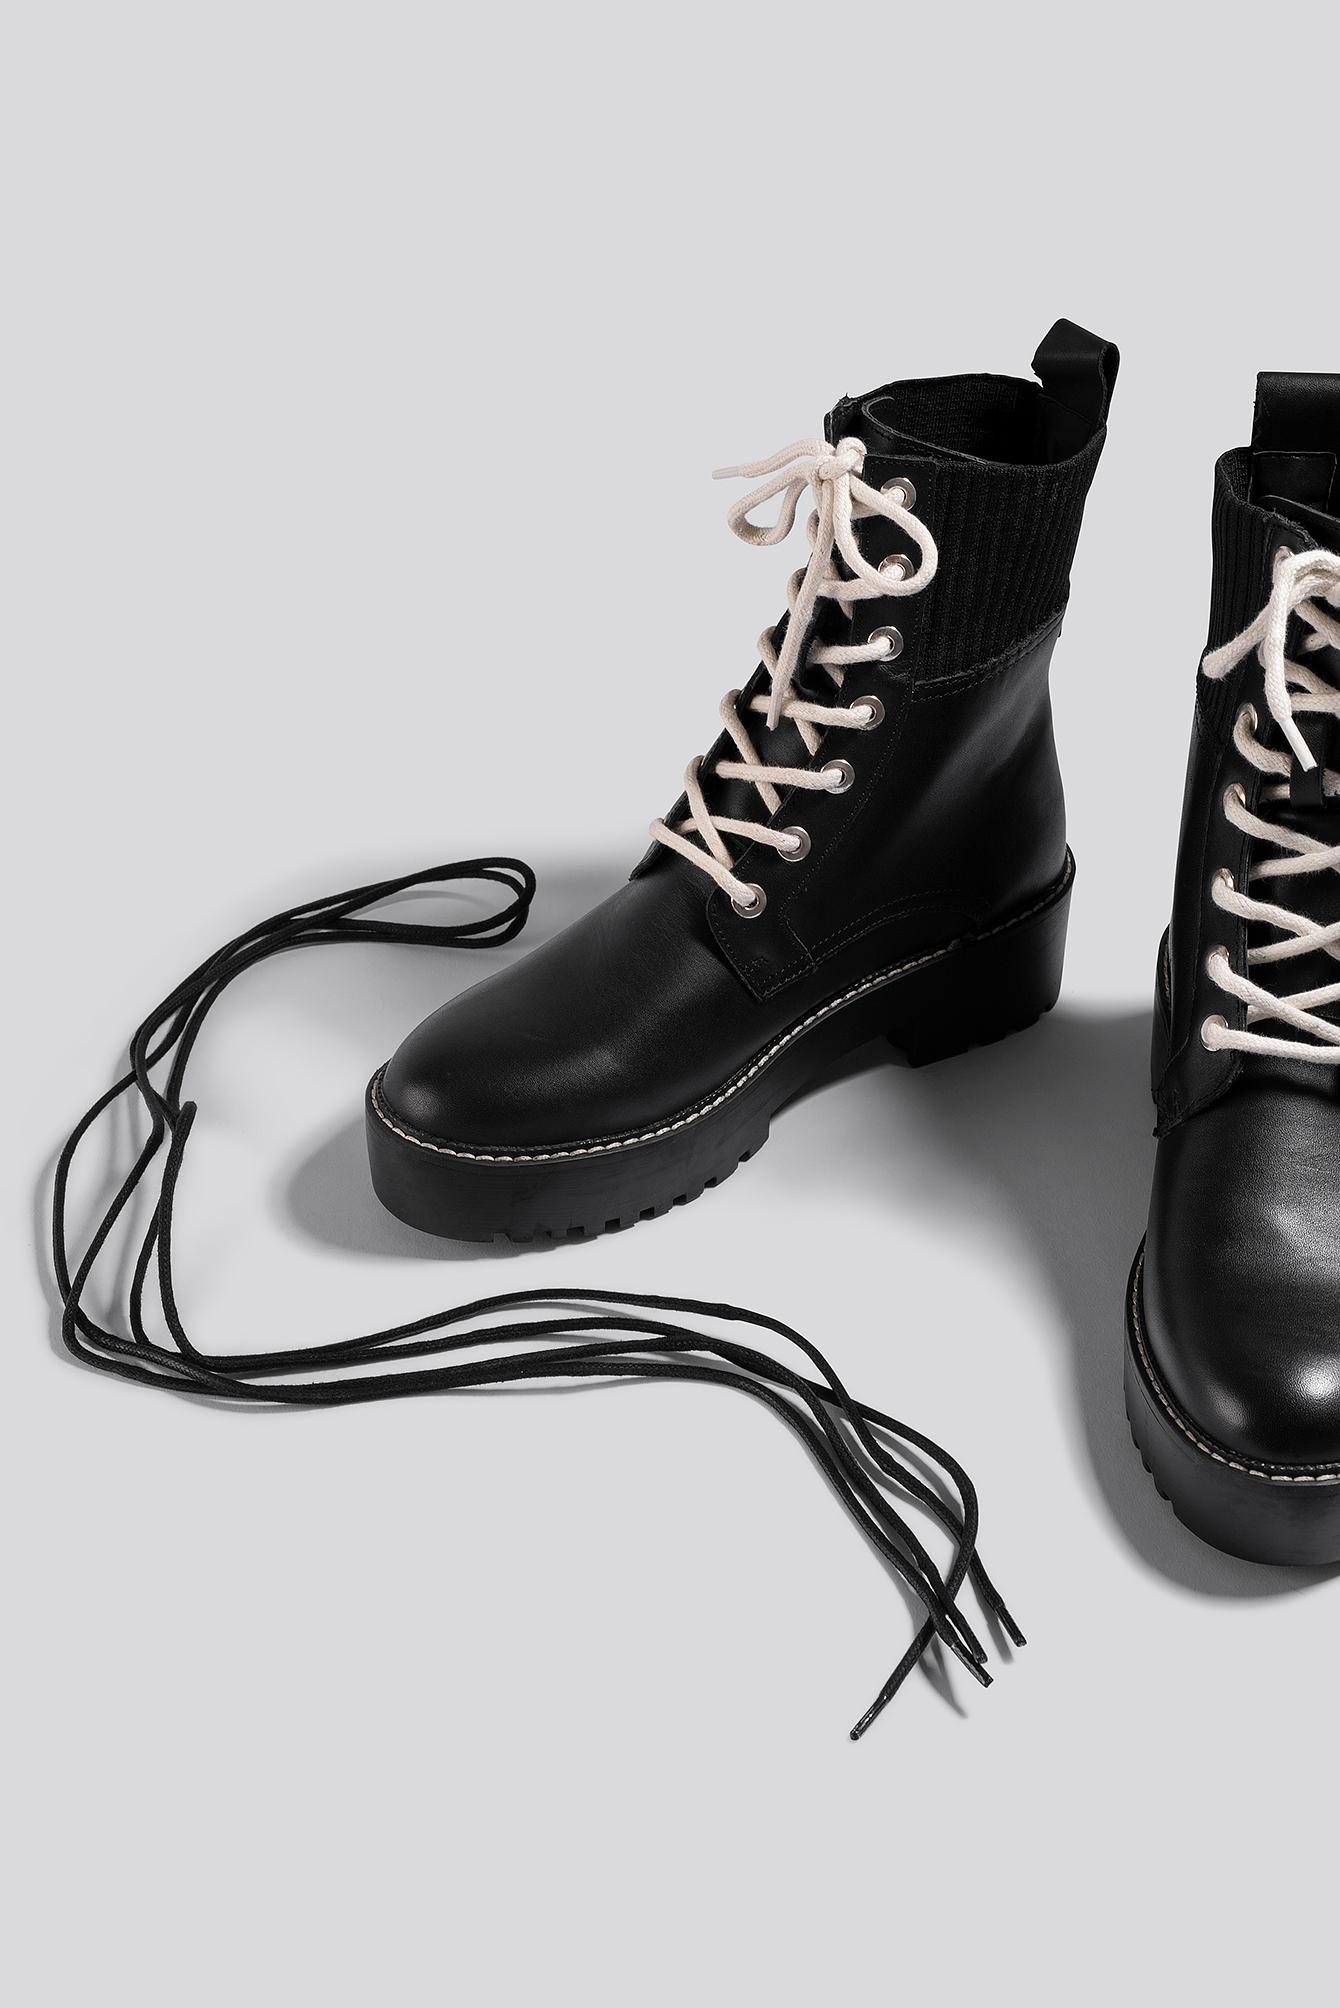 Mango Leather Salma Ankle Boots Black - Lyst